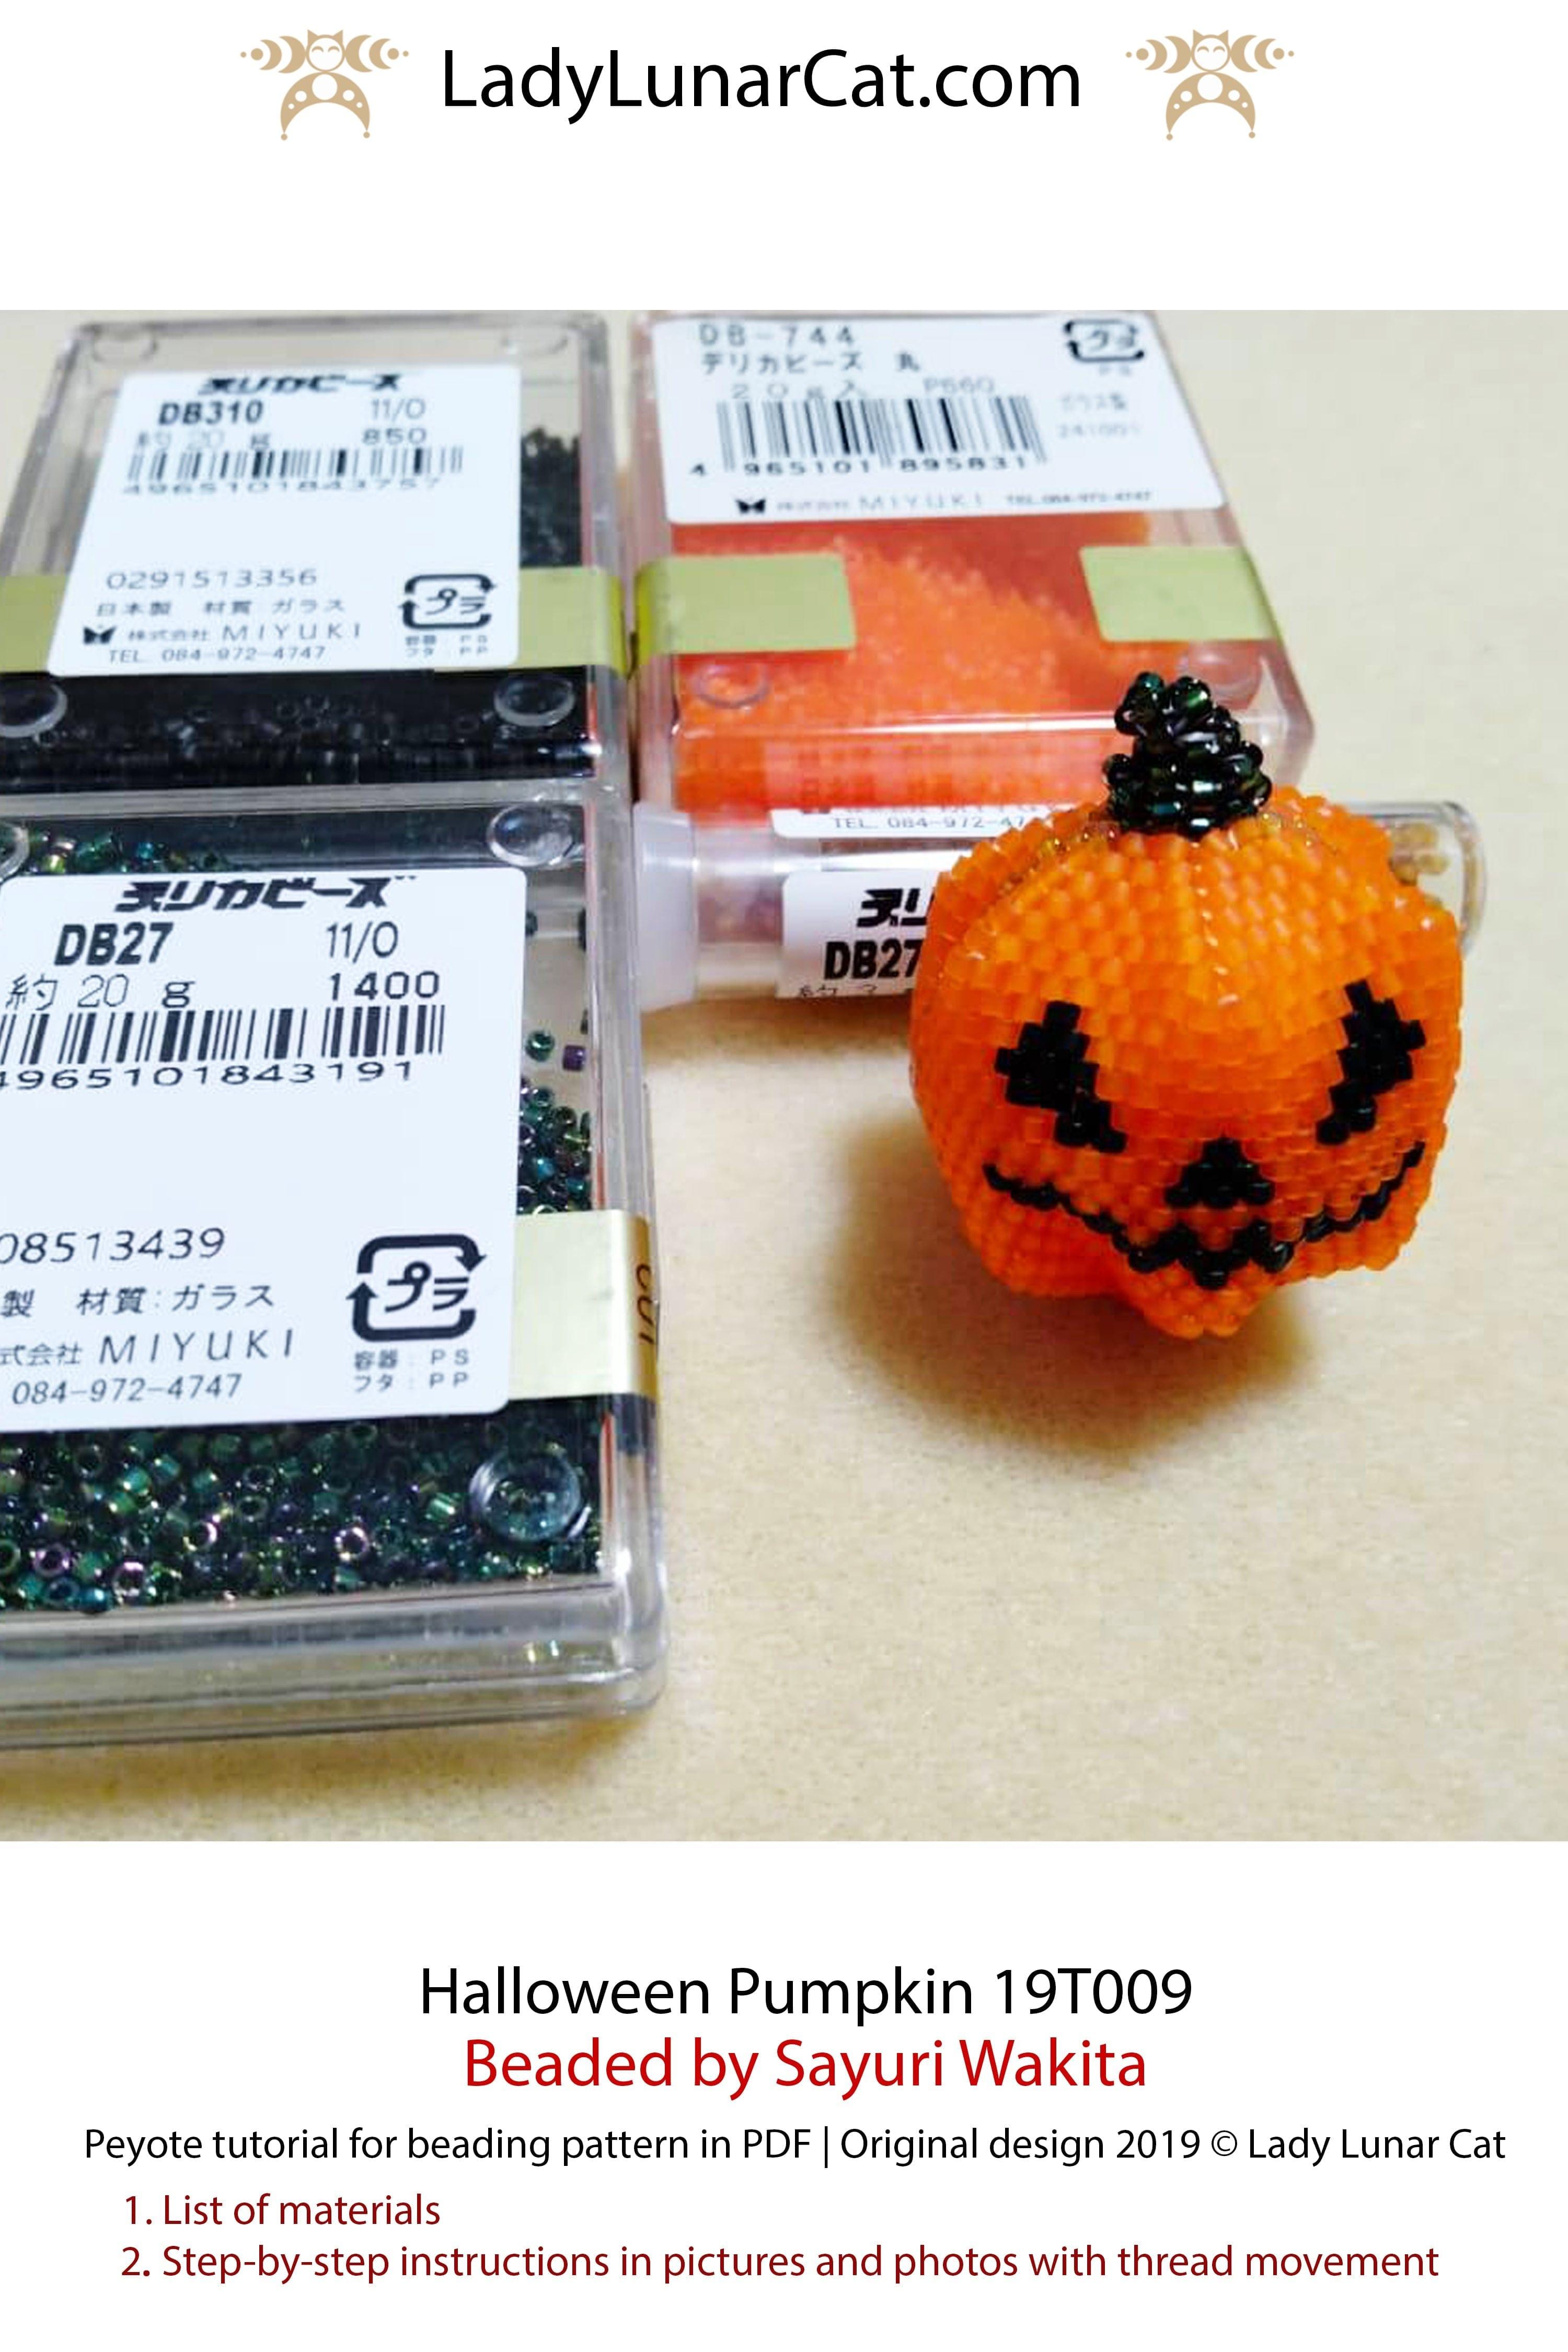 Beading tutorial for 3d peyote pod Pumpkin Halloween 19PT009